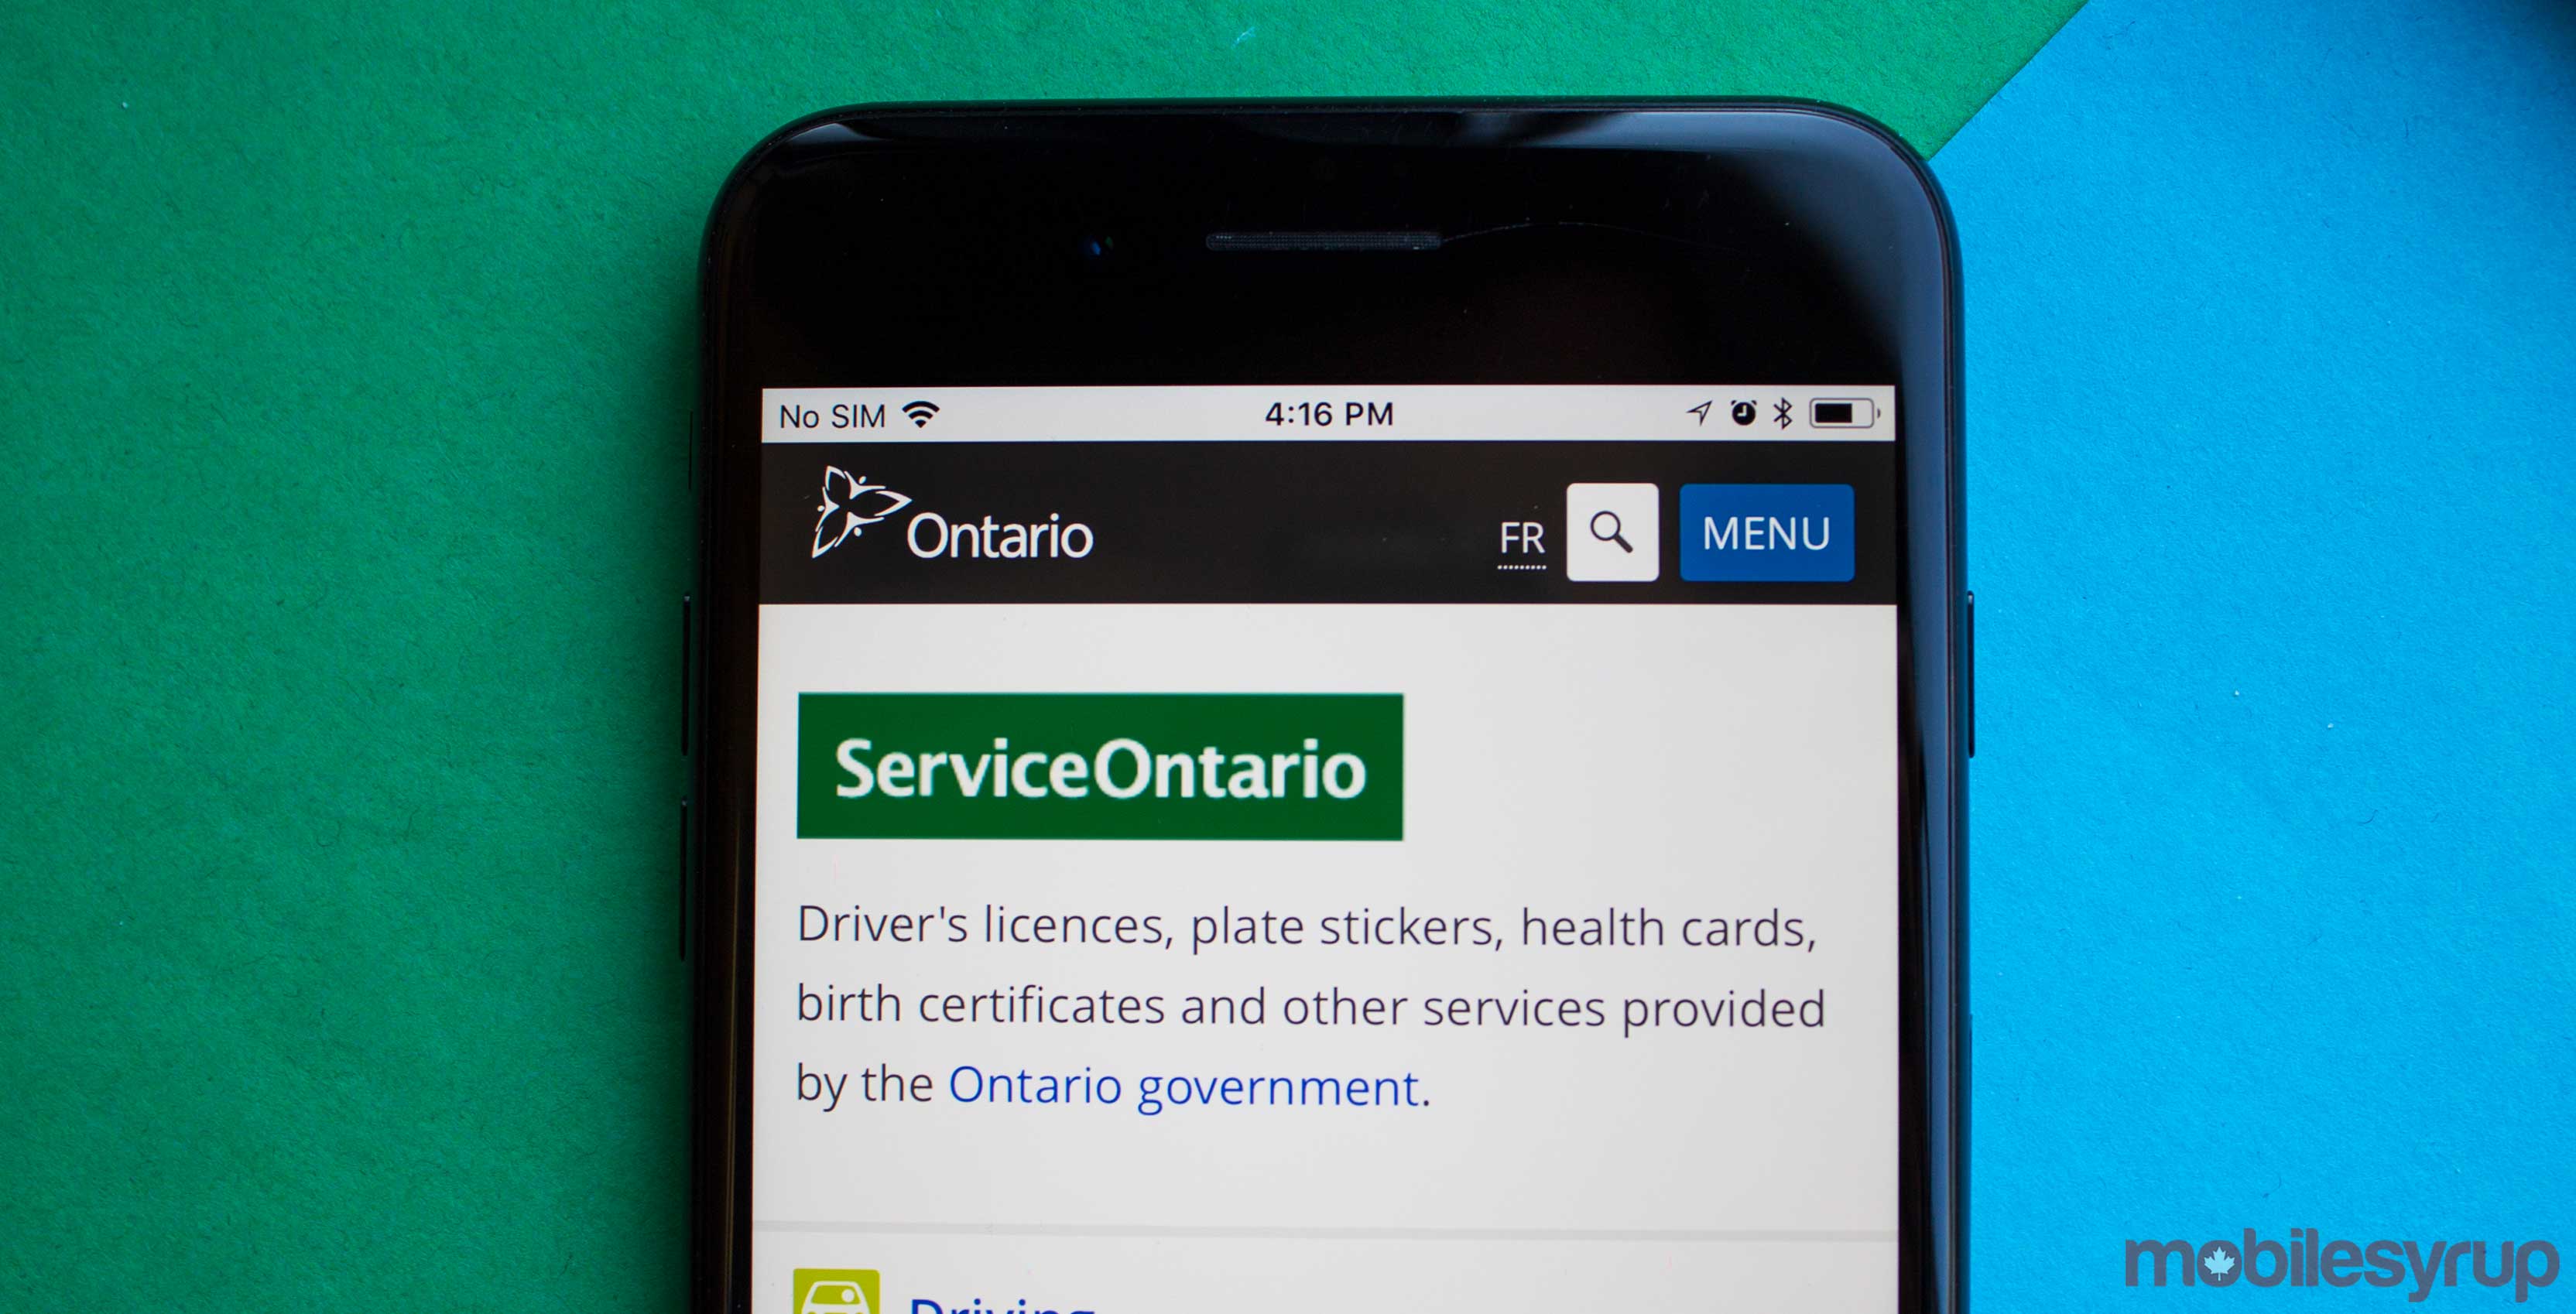 Service Ontario website on phone